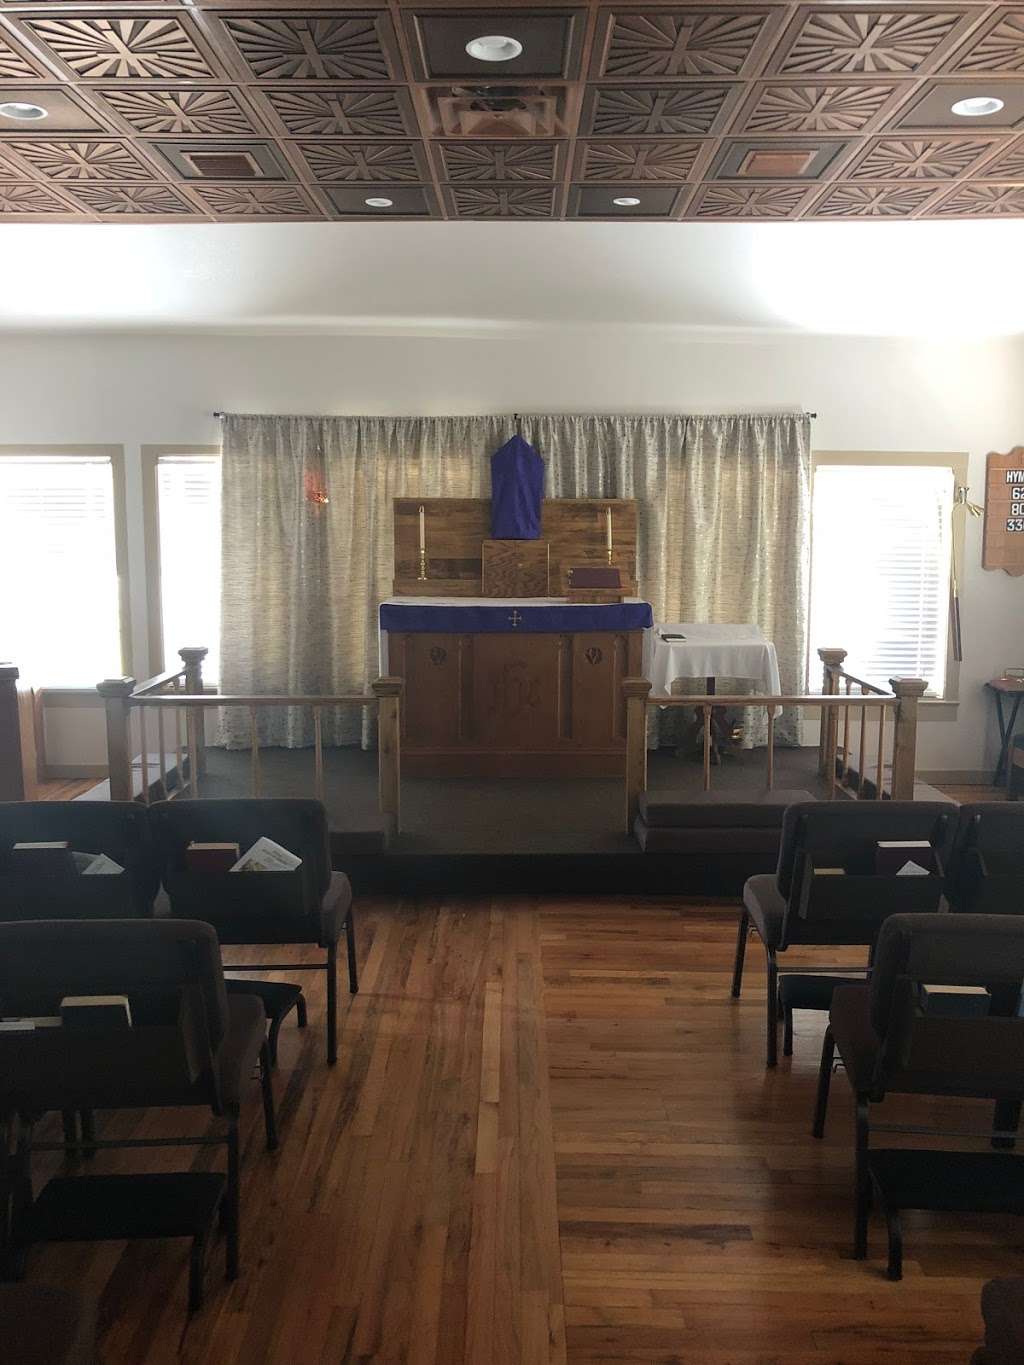 Grace Anglican Church | 4971 E Co Rd 462, Wildwood, FL 34785, USA | Phone: (352) 630-4815